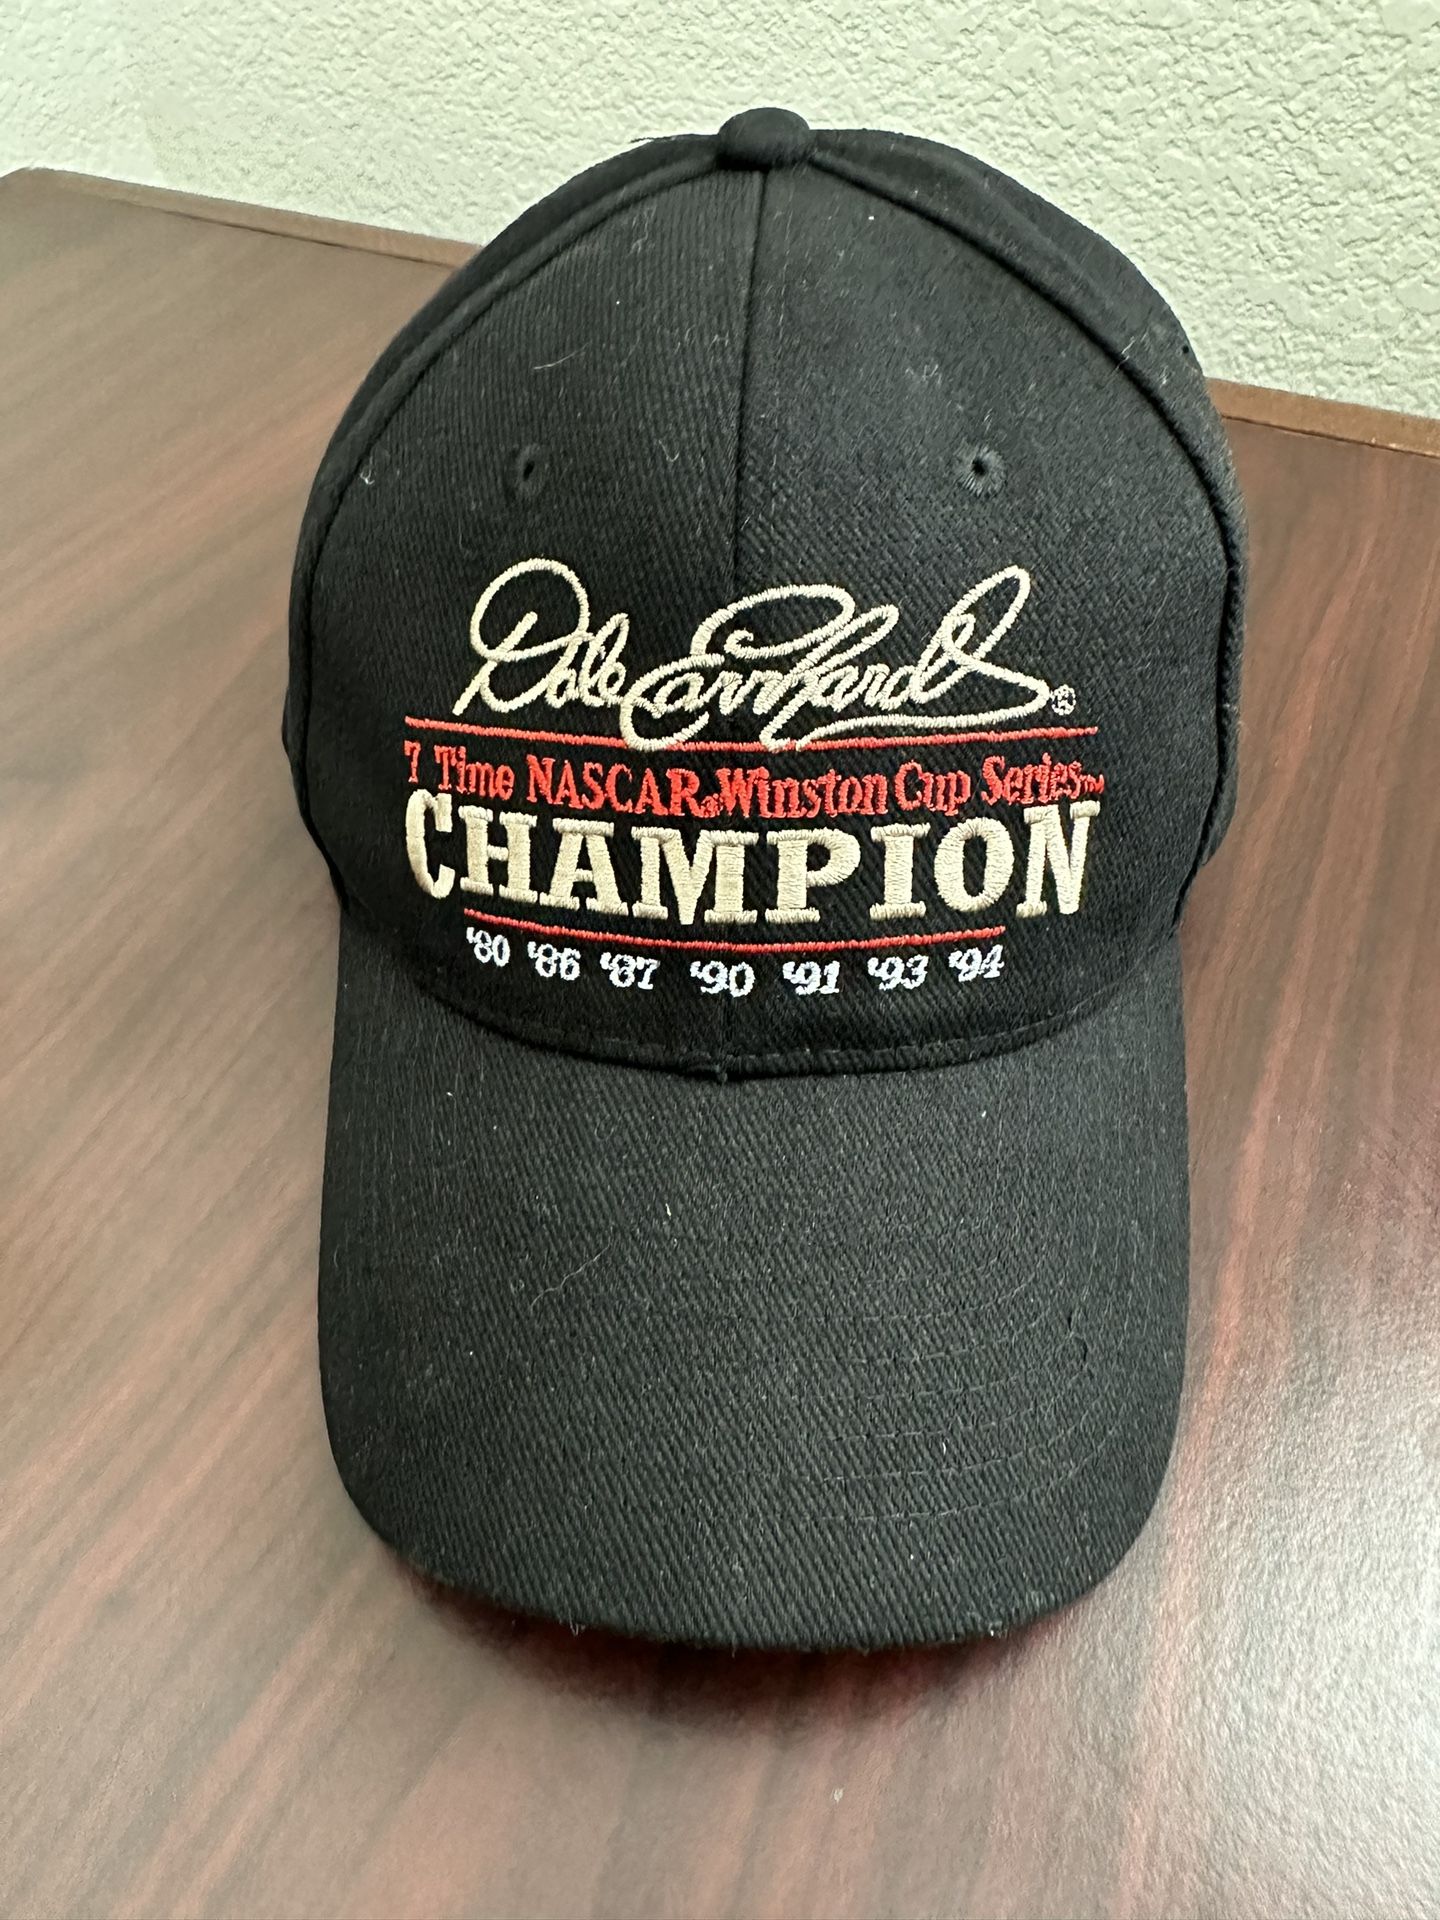 Dale Earnhardt NASCAR Champion Hat